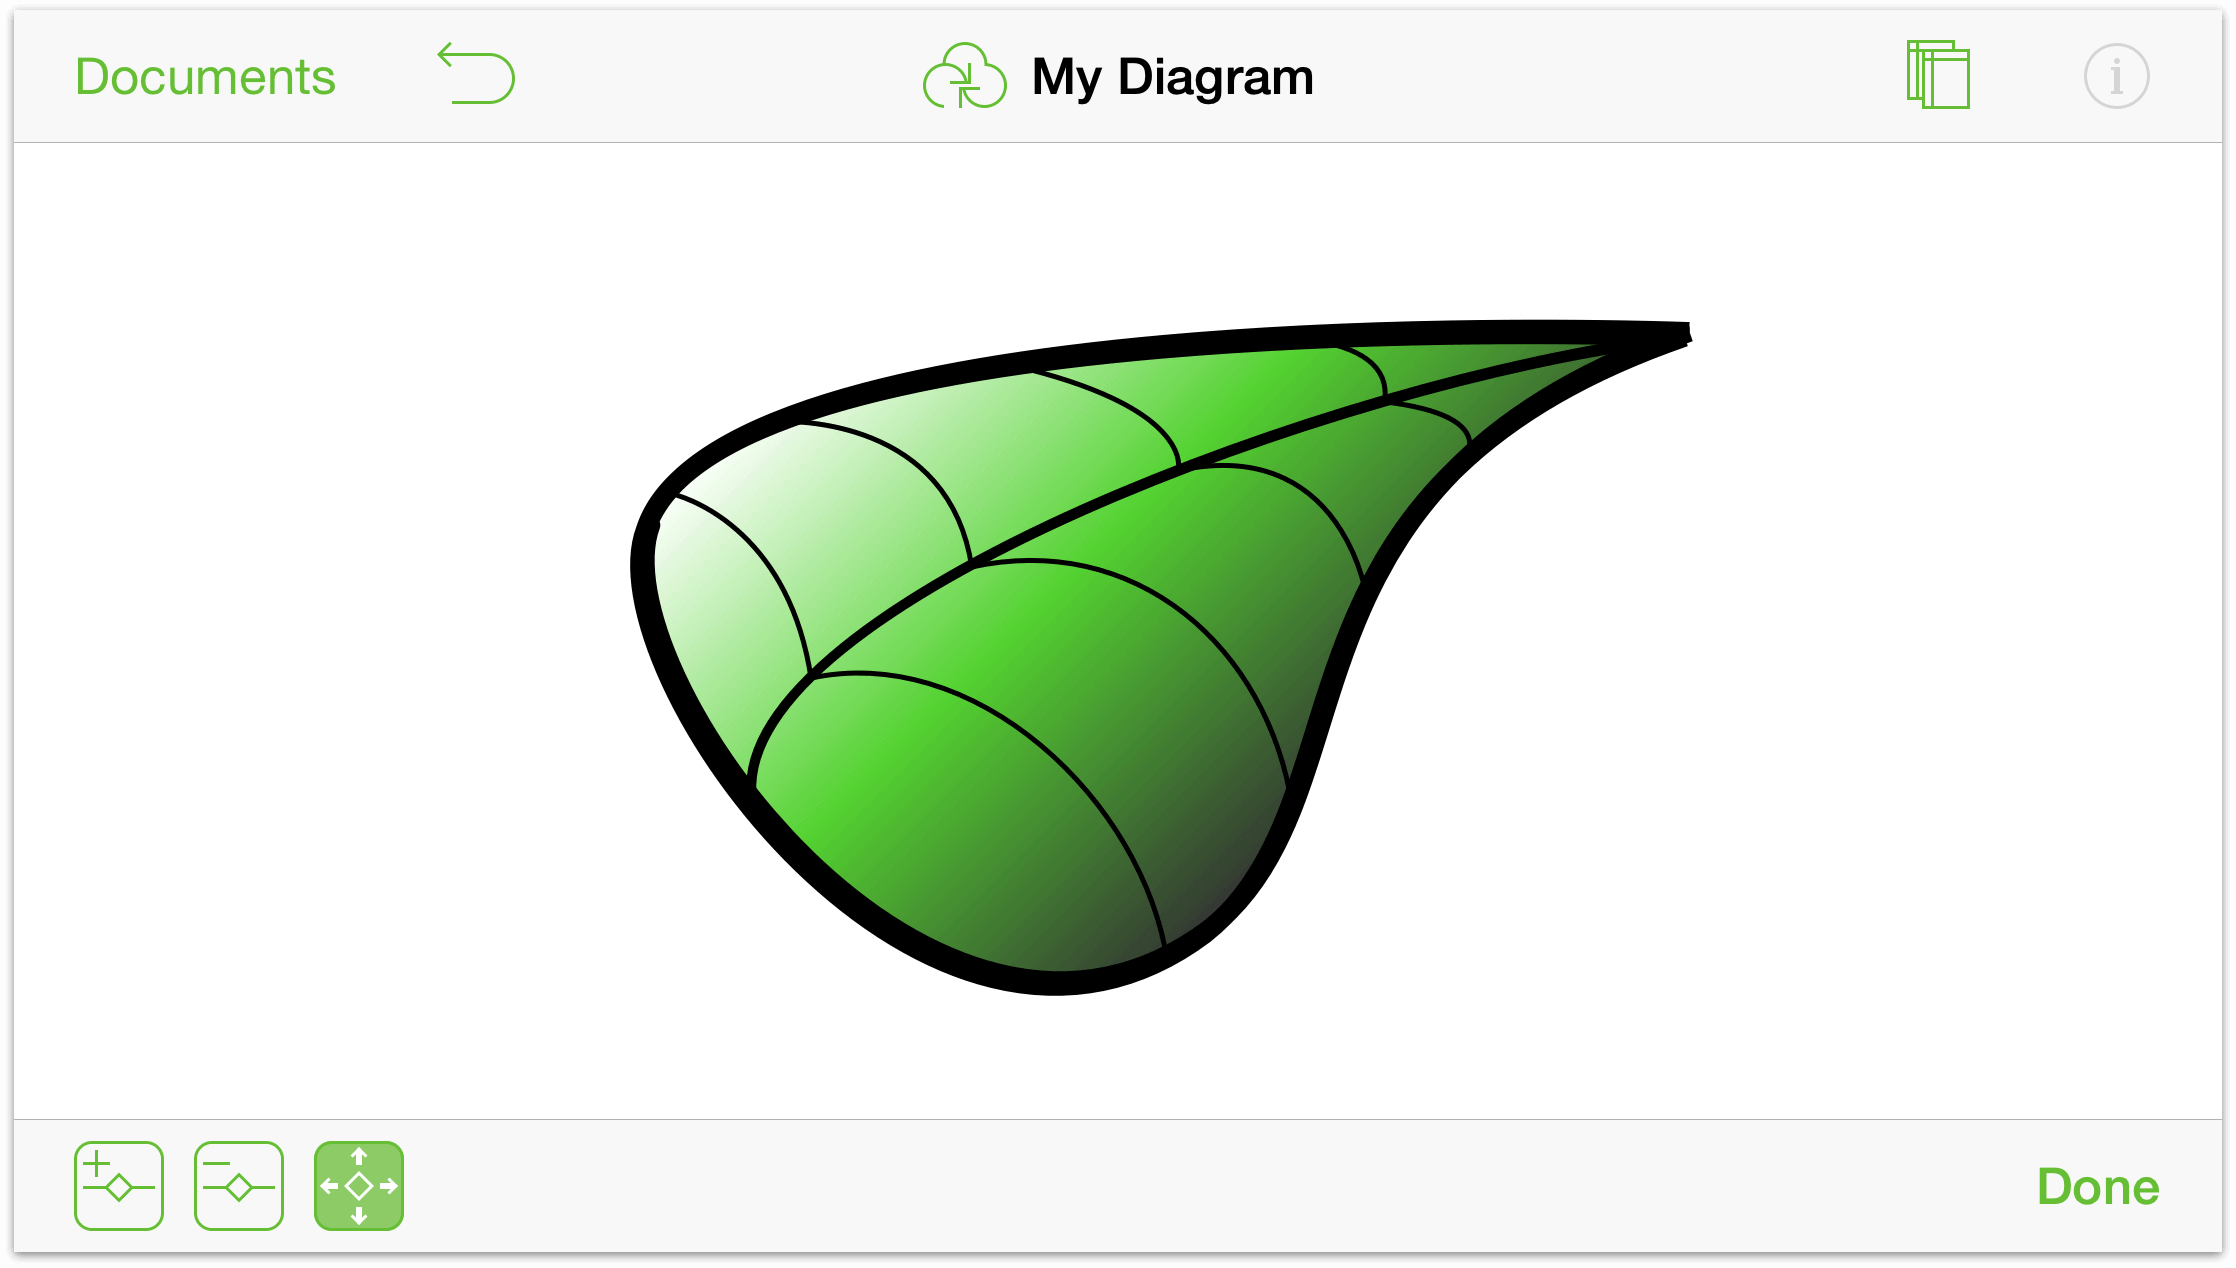 The finished leaf